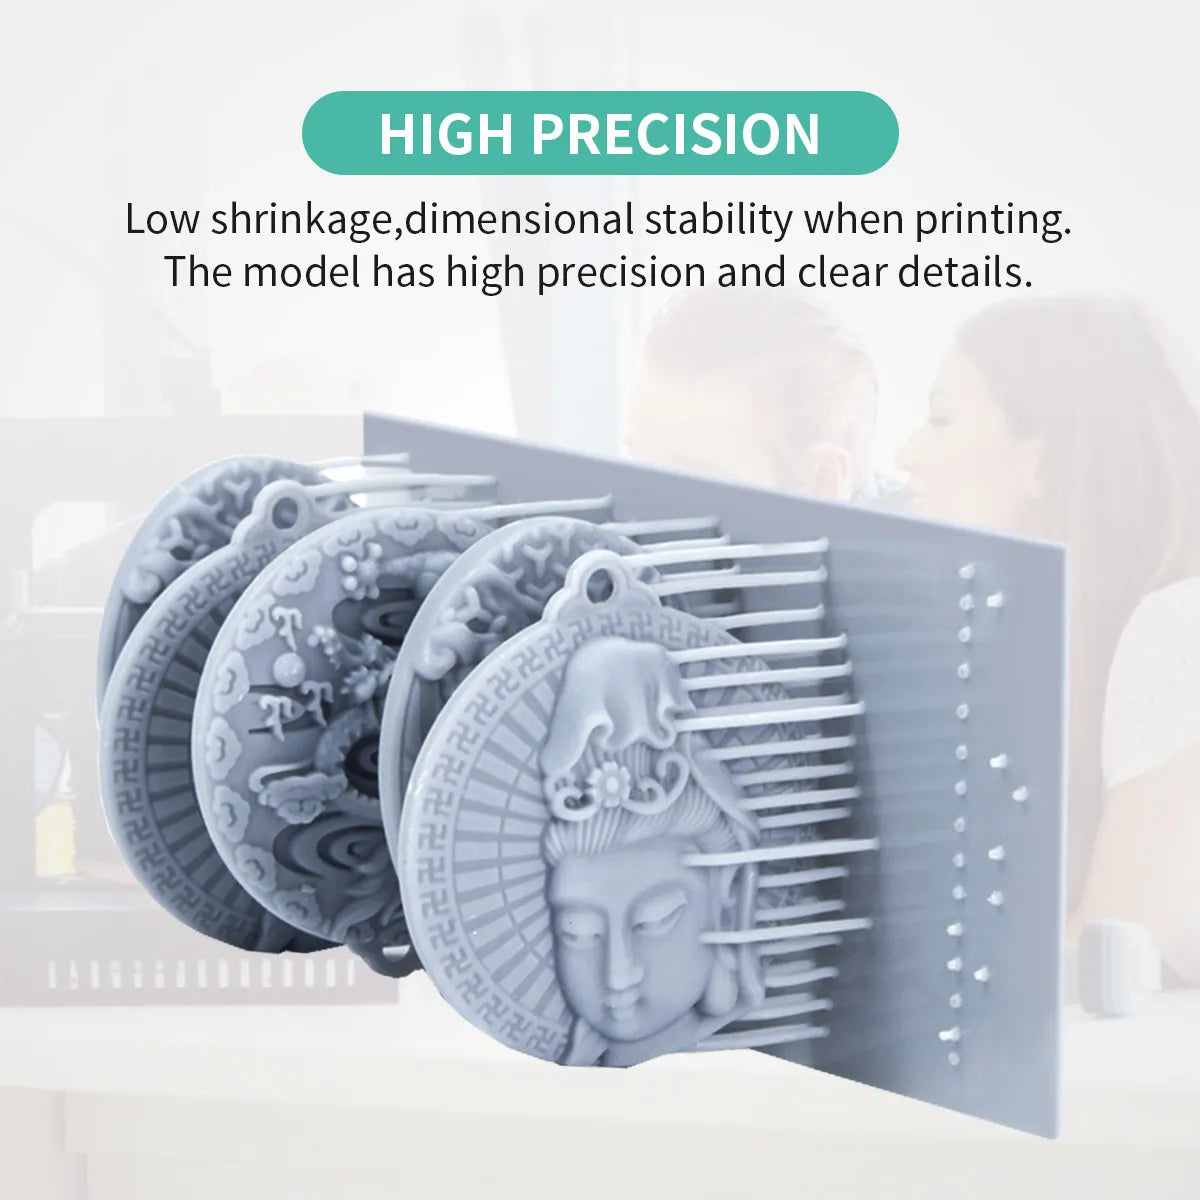 SUNLU Like-ABS/Standard/Plant-based UV Resin Liquid 500G Low Odor Fast Curing Good Precision LCD 3D Printer Photopolymer Resin